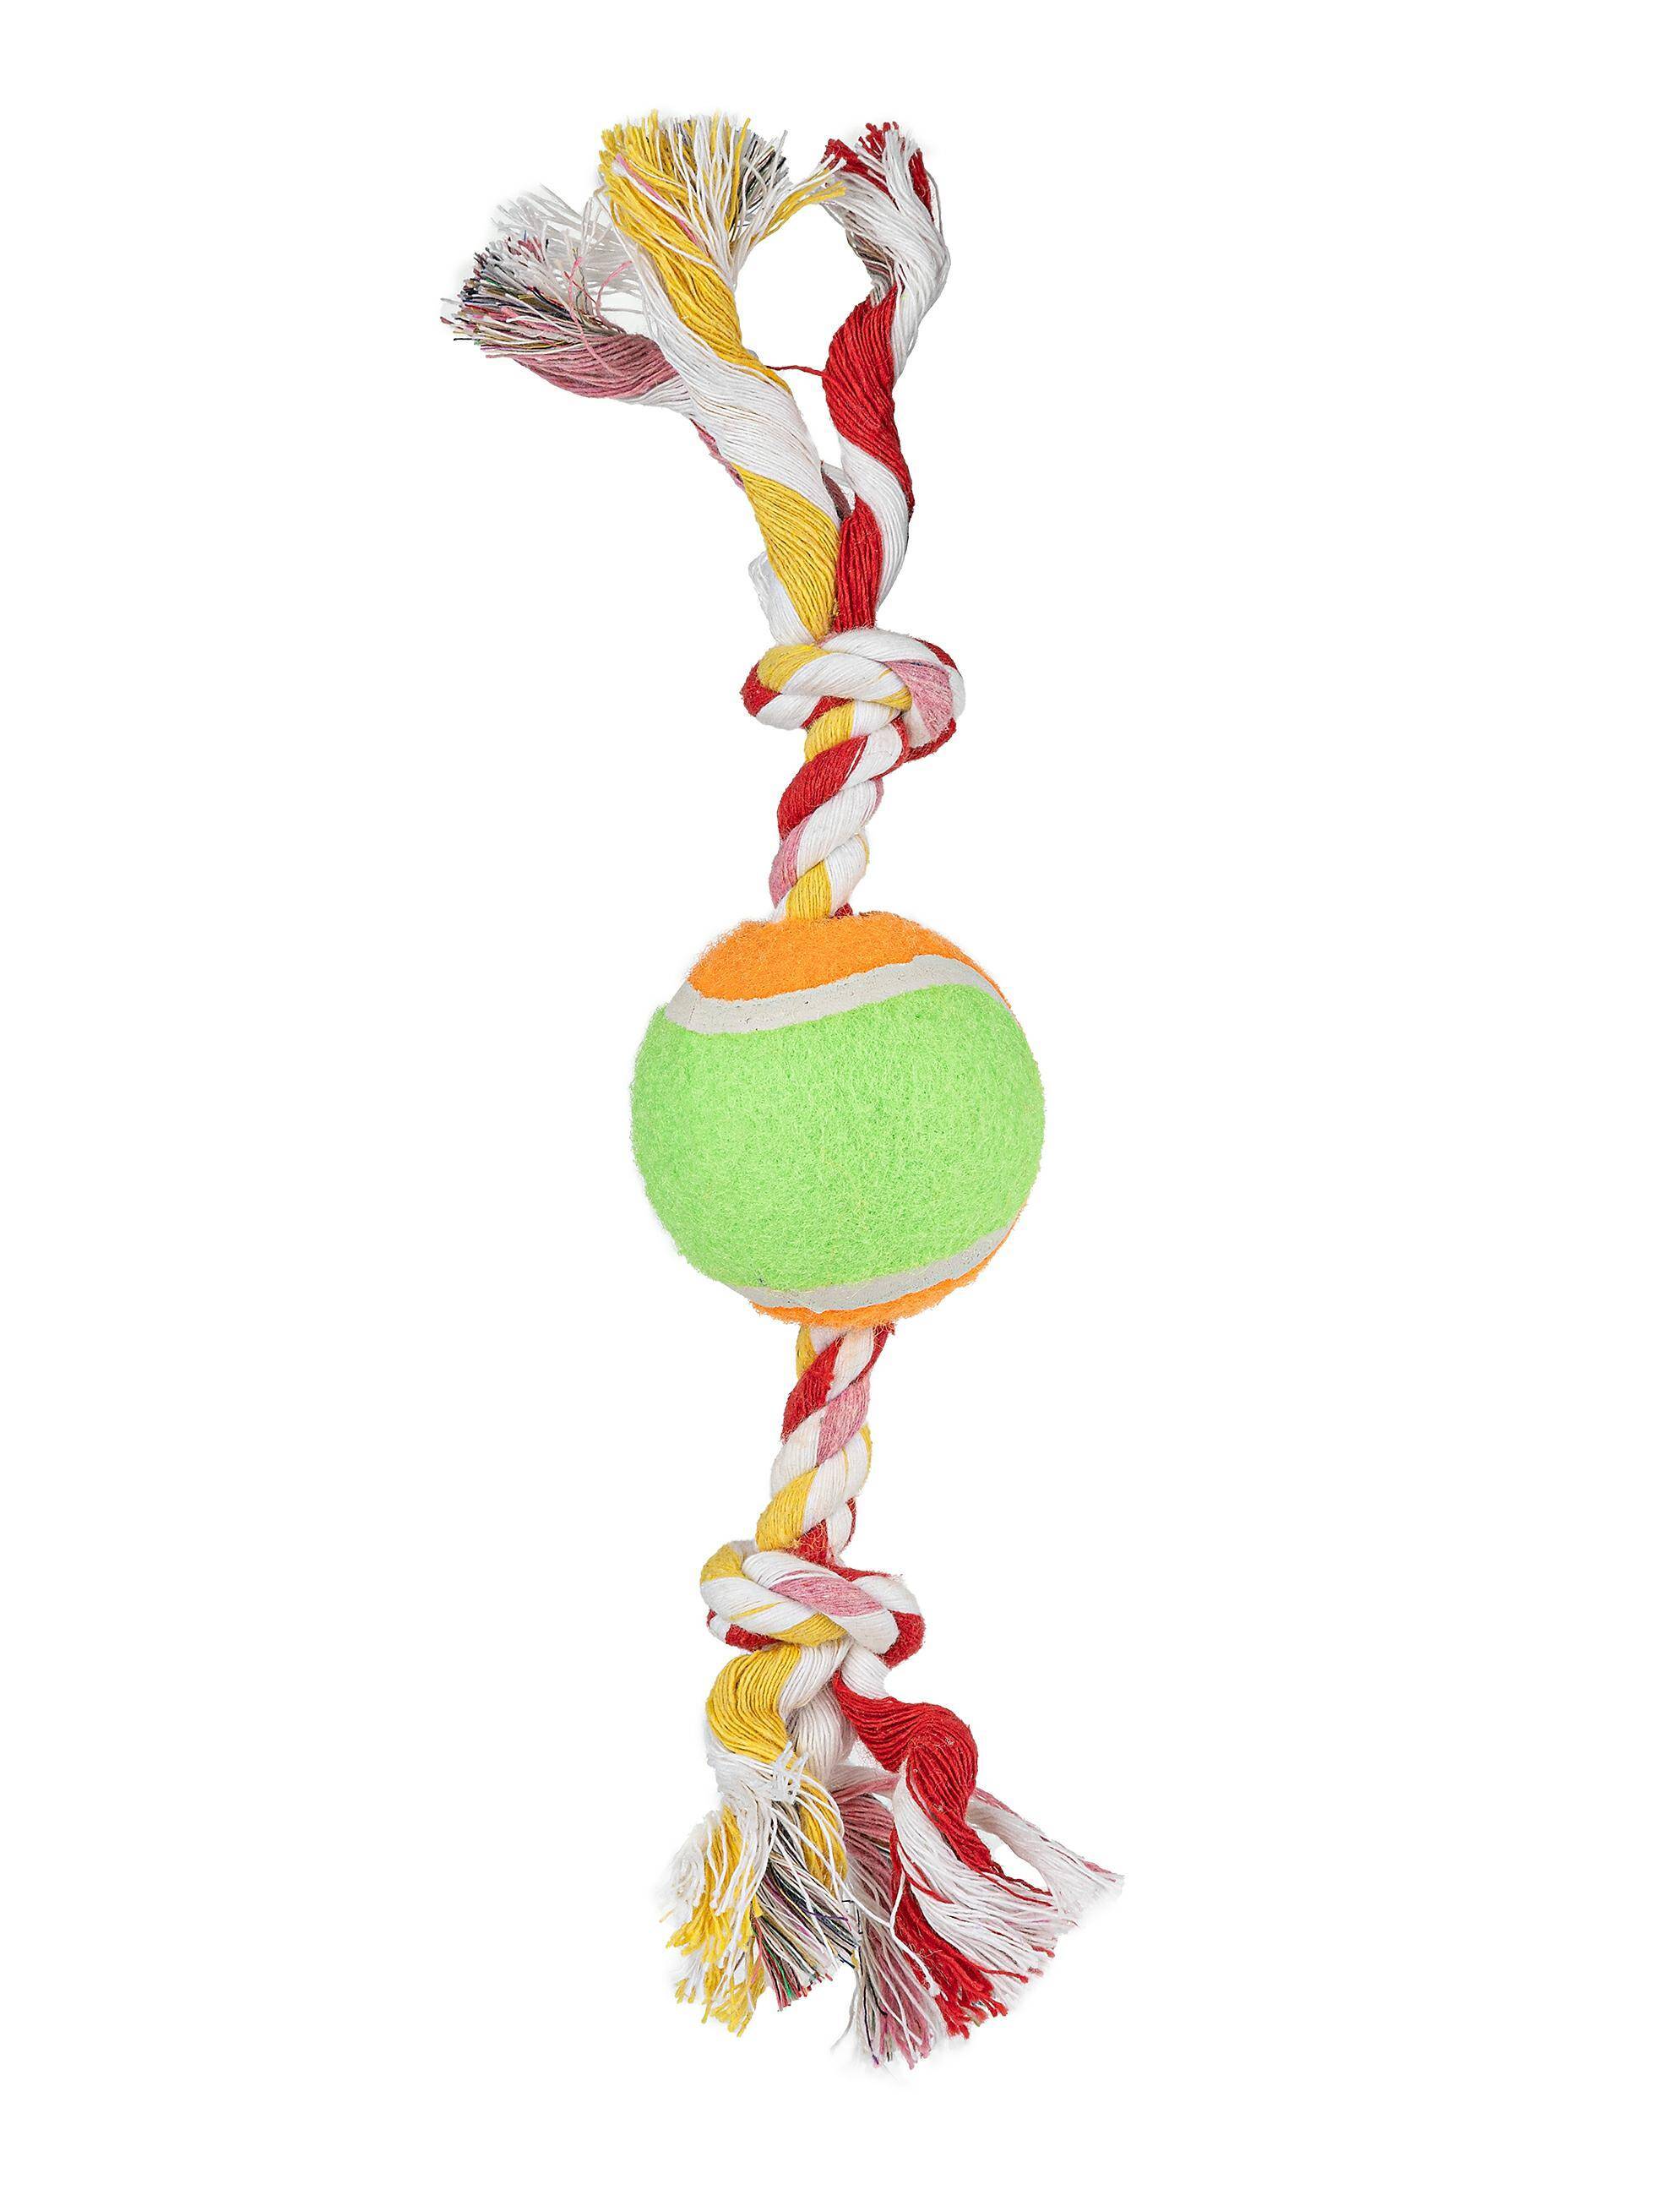 Rope knots tennis